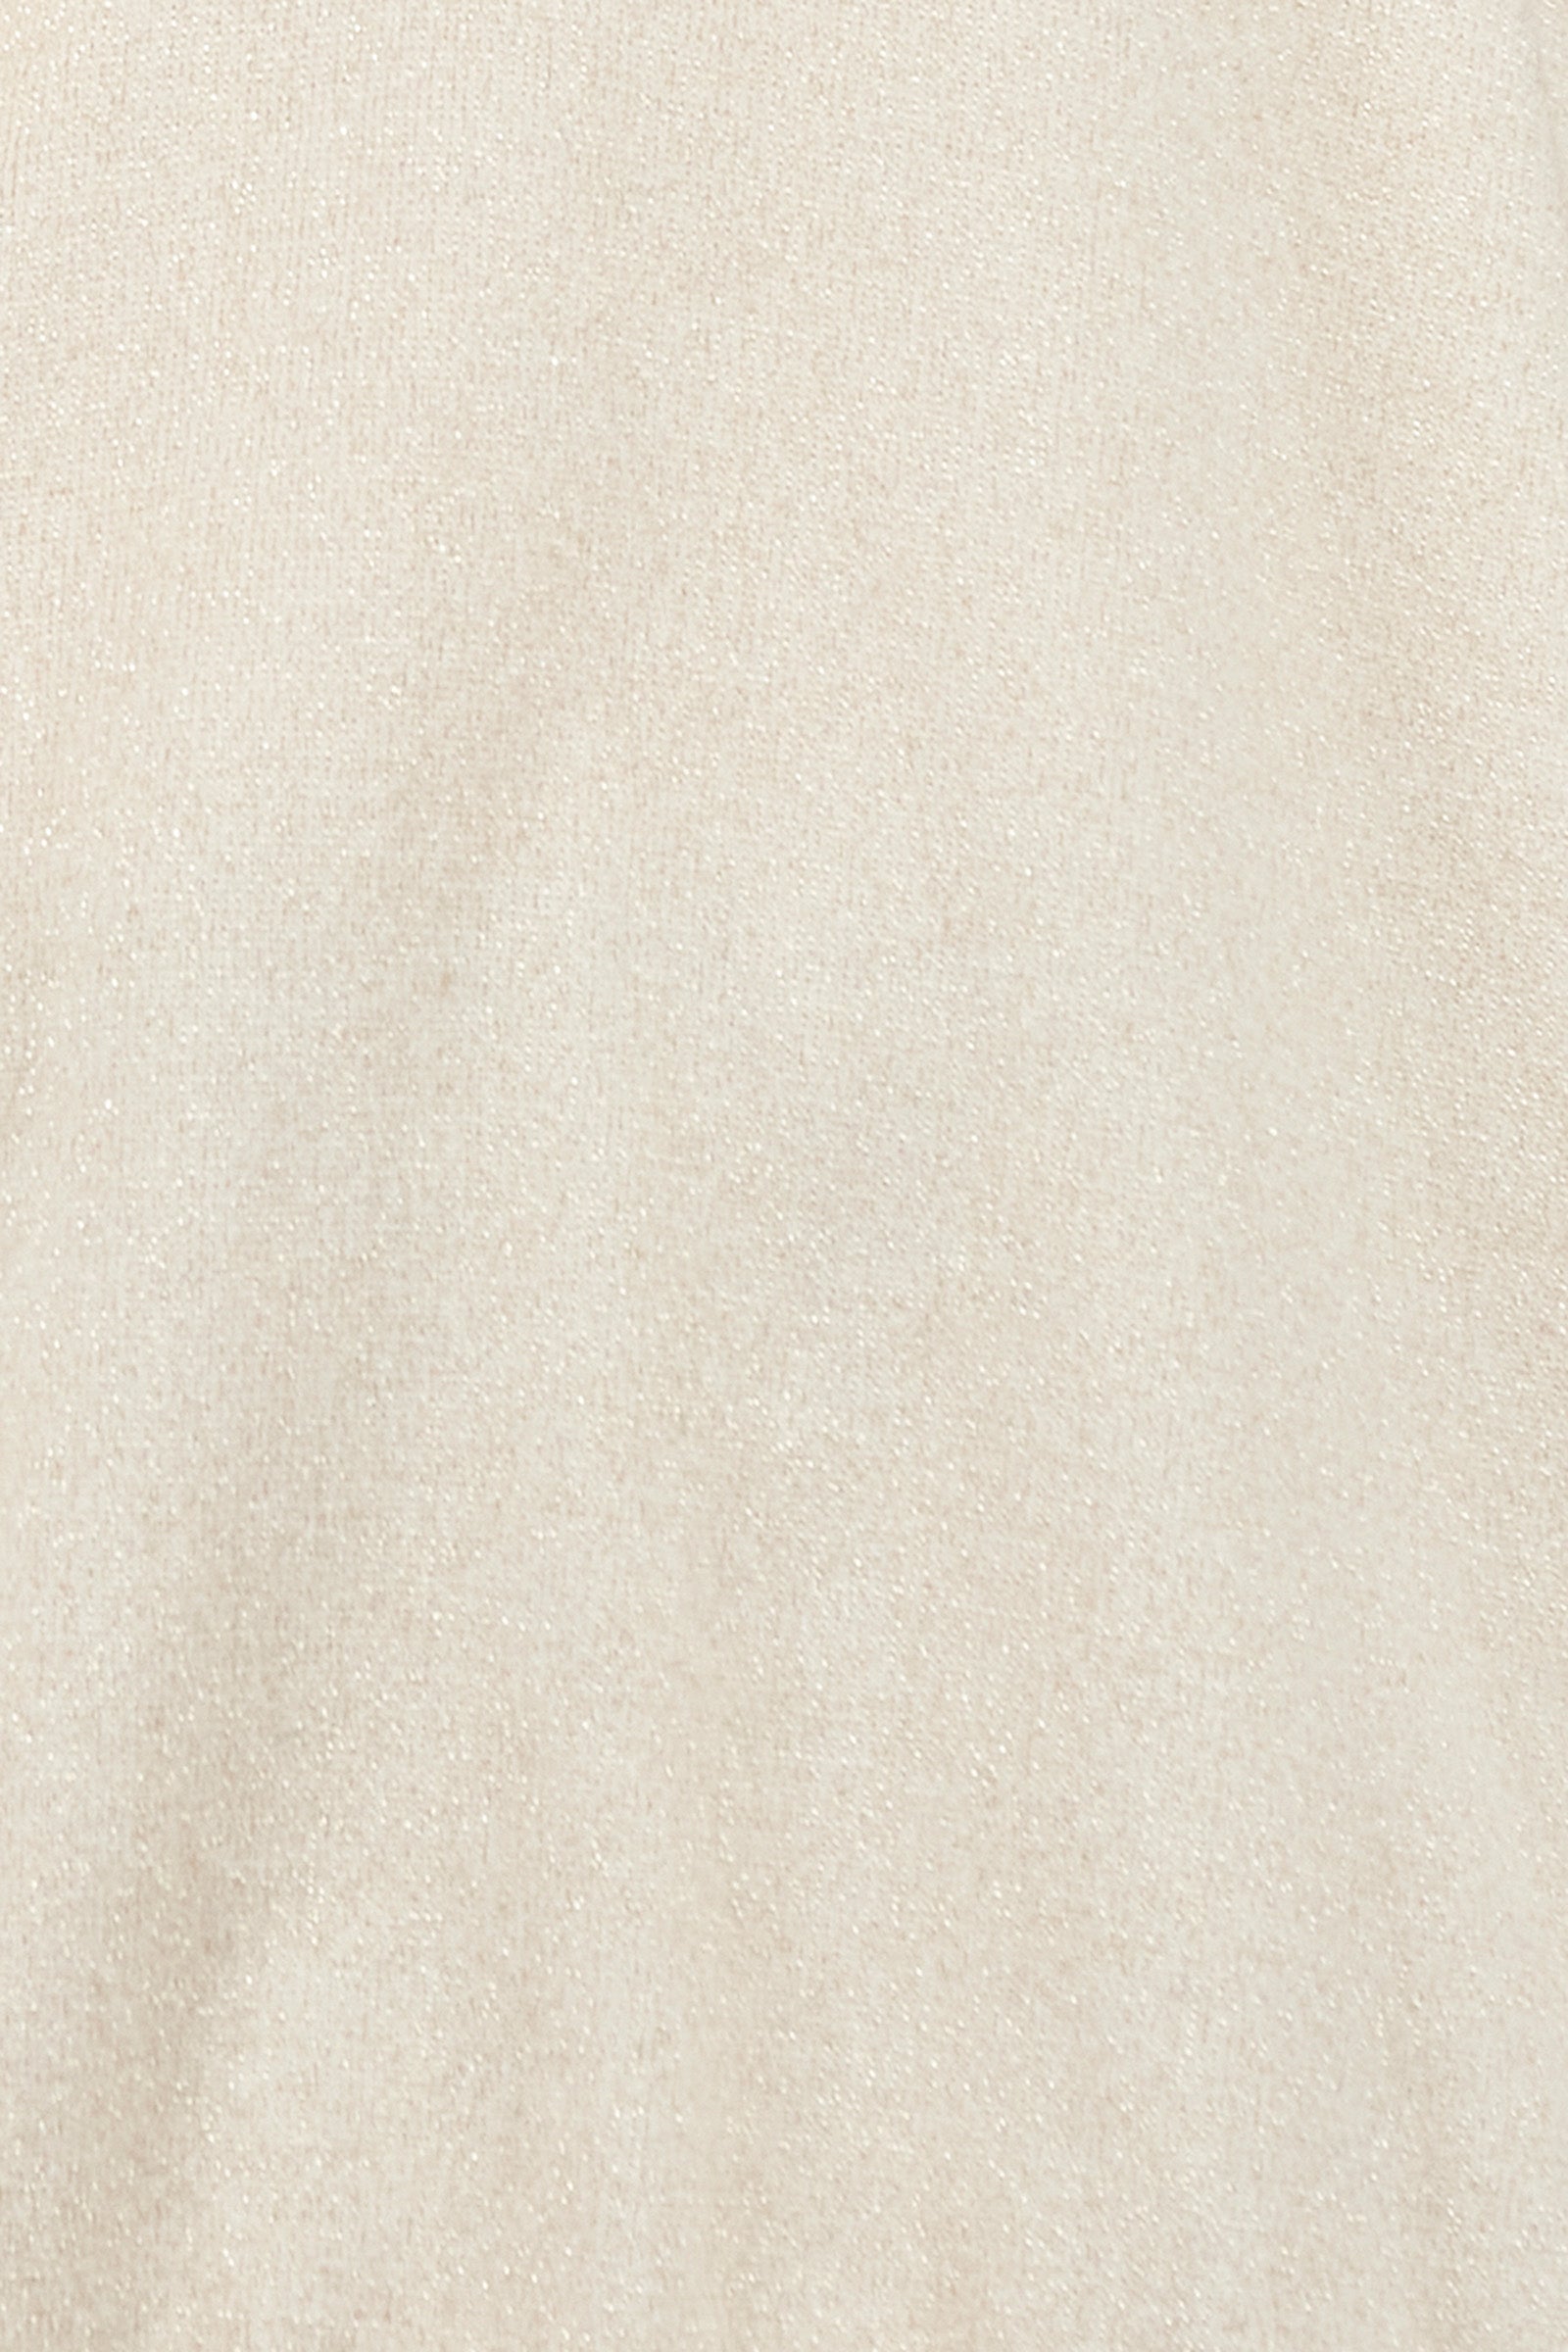 Irula Cardigan - Malt - eb&ive Clothing - Knit Cardigan